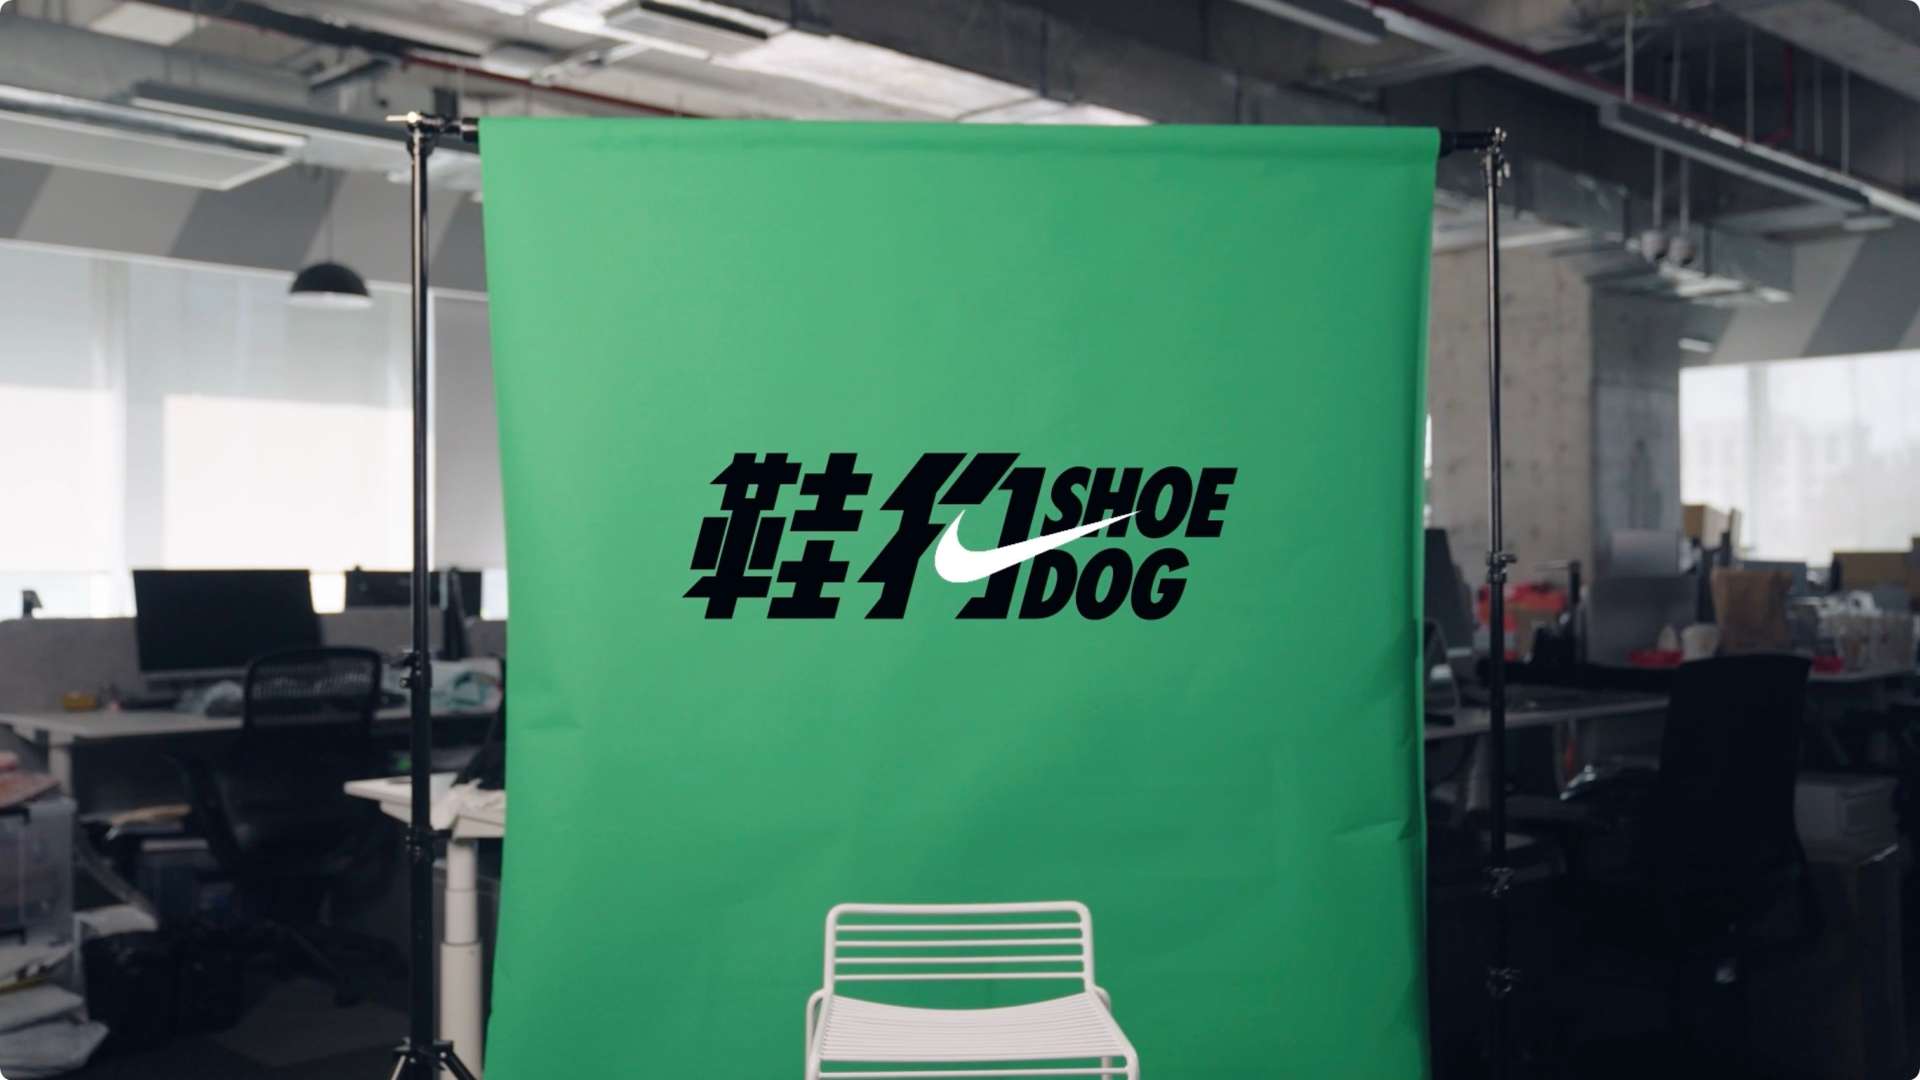 「NIKE SHOE DOG 」 球鞋系列专题片 EP02